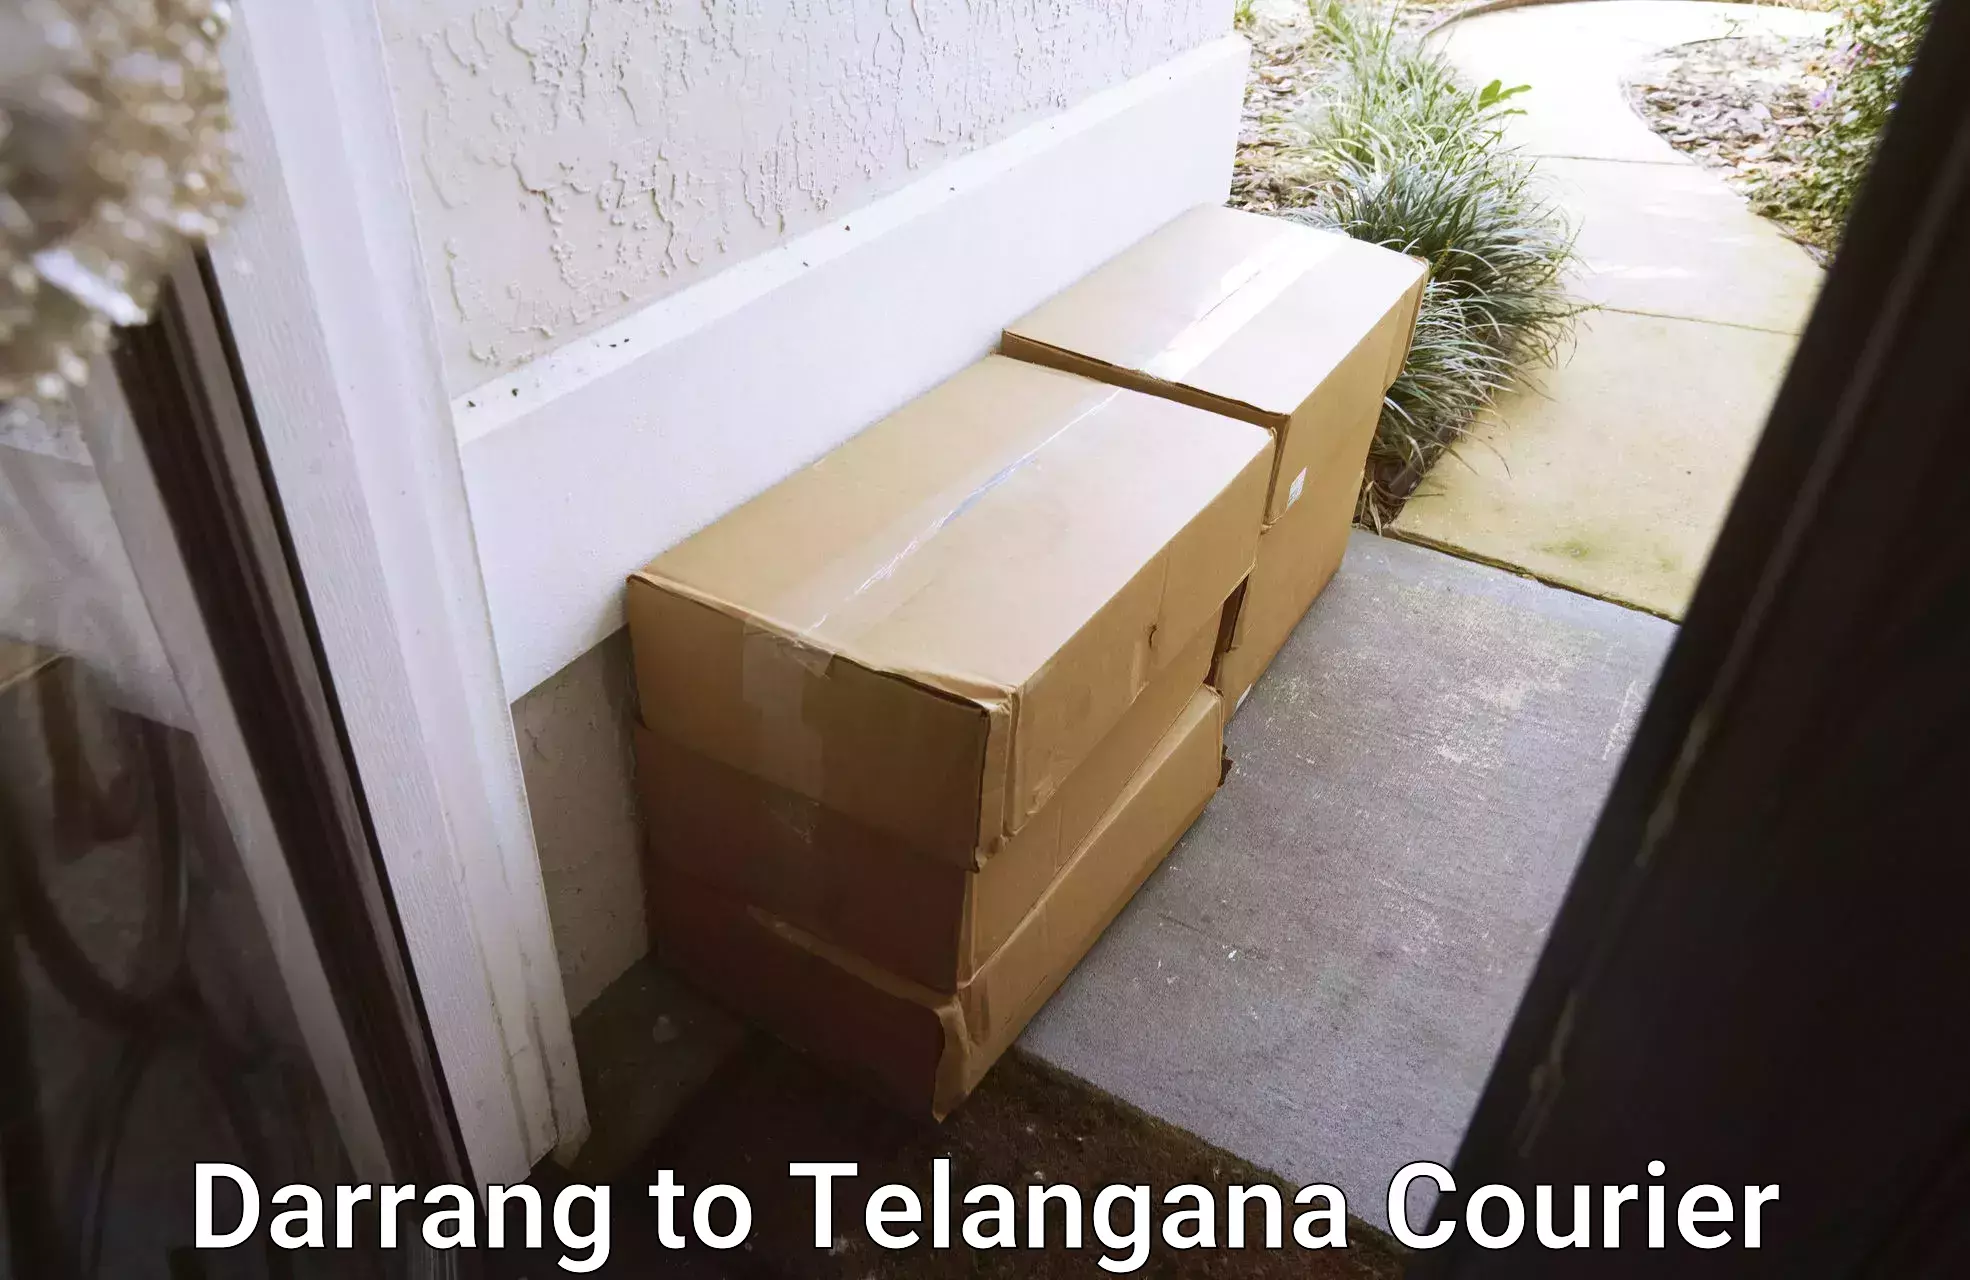 On-call courier service Darrang to Khammam